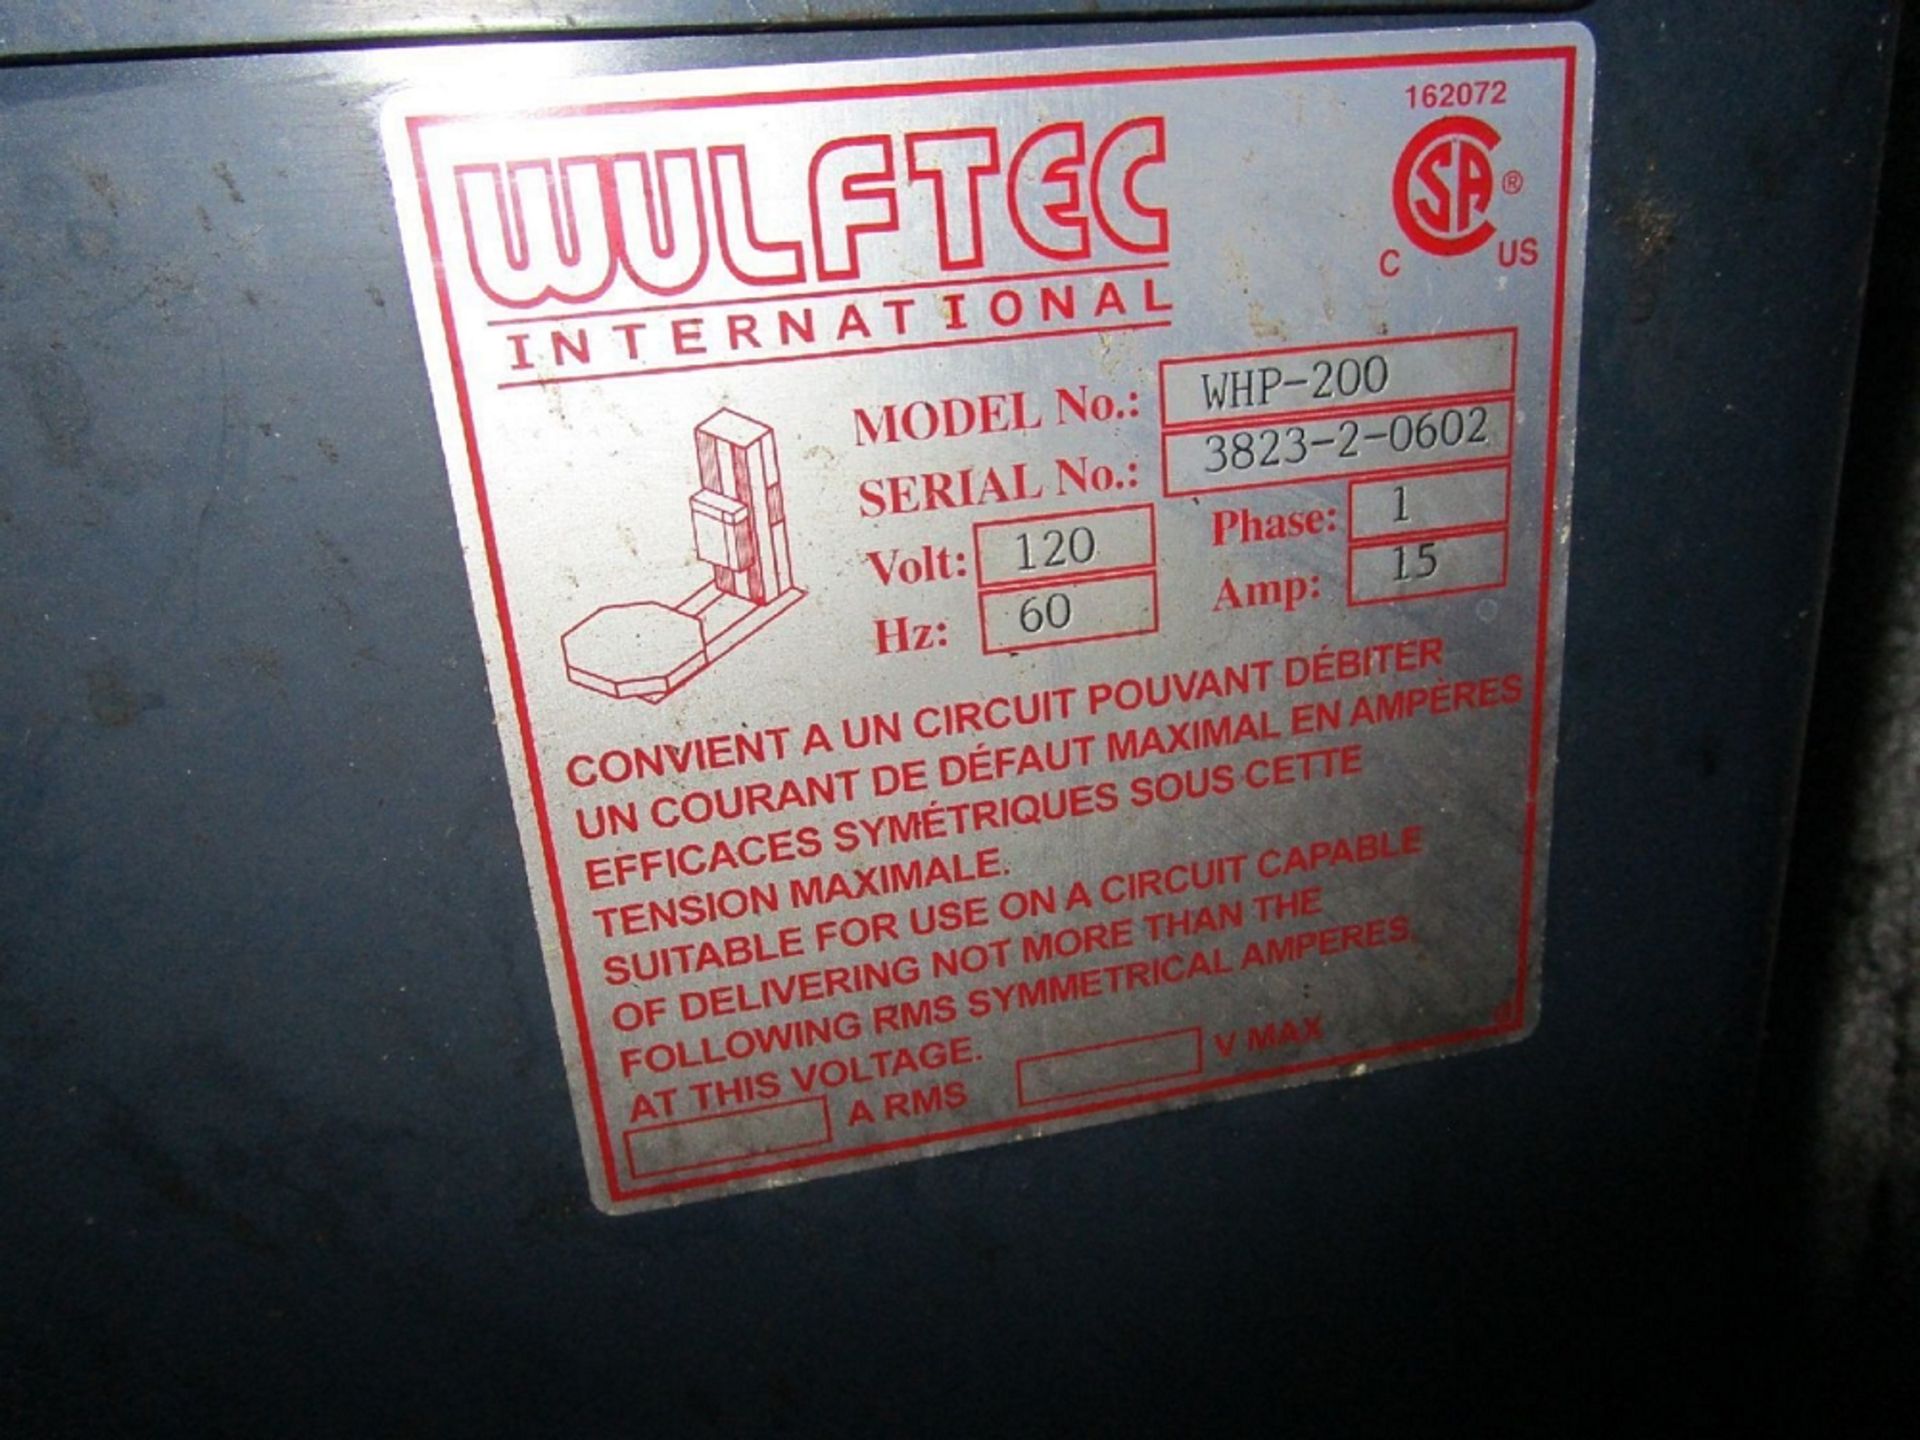 Wultec Model WHP-200 Semi-Automatic Shrink Wrap Machine - Image 4 of 4